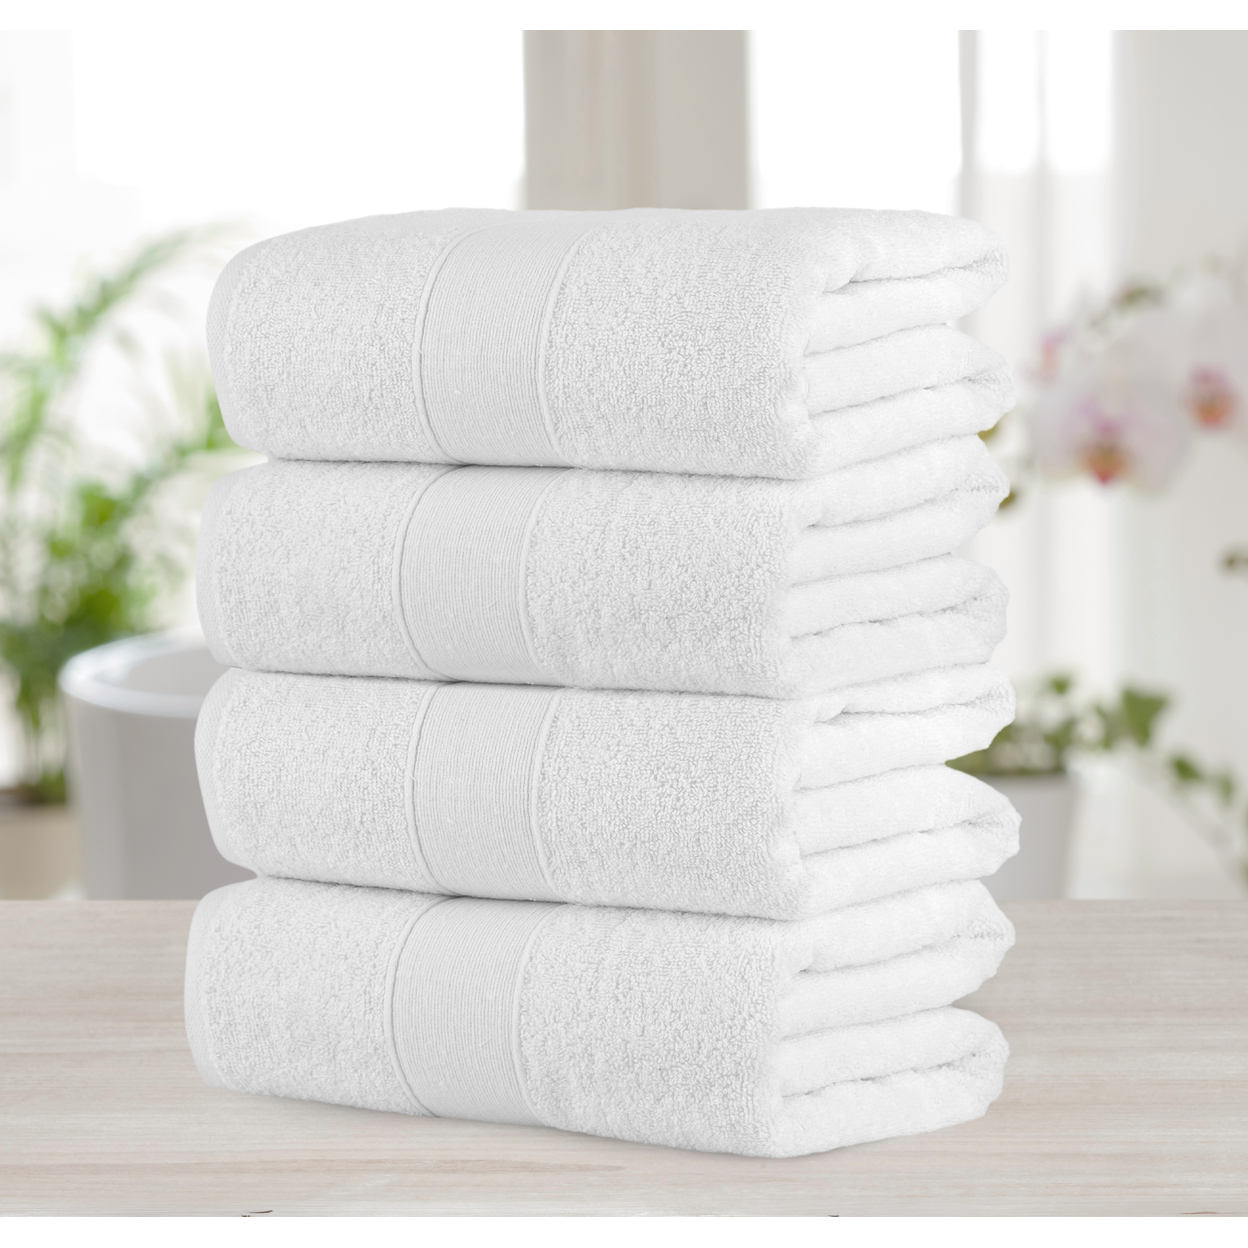 Chic Home Luxurious 4-Piece 100% Pure Turkish Cotton Bath Towels, 30 X 54, Dobby Border Design, OEKO-TEX Certified Set - White